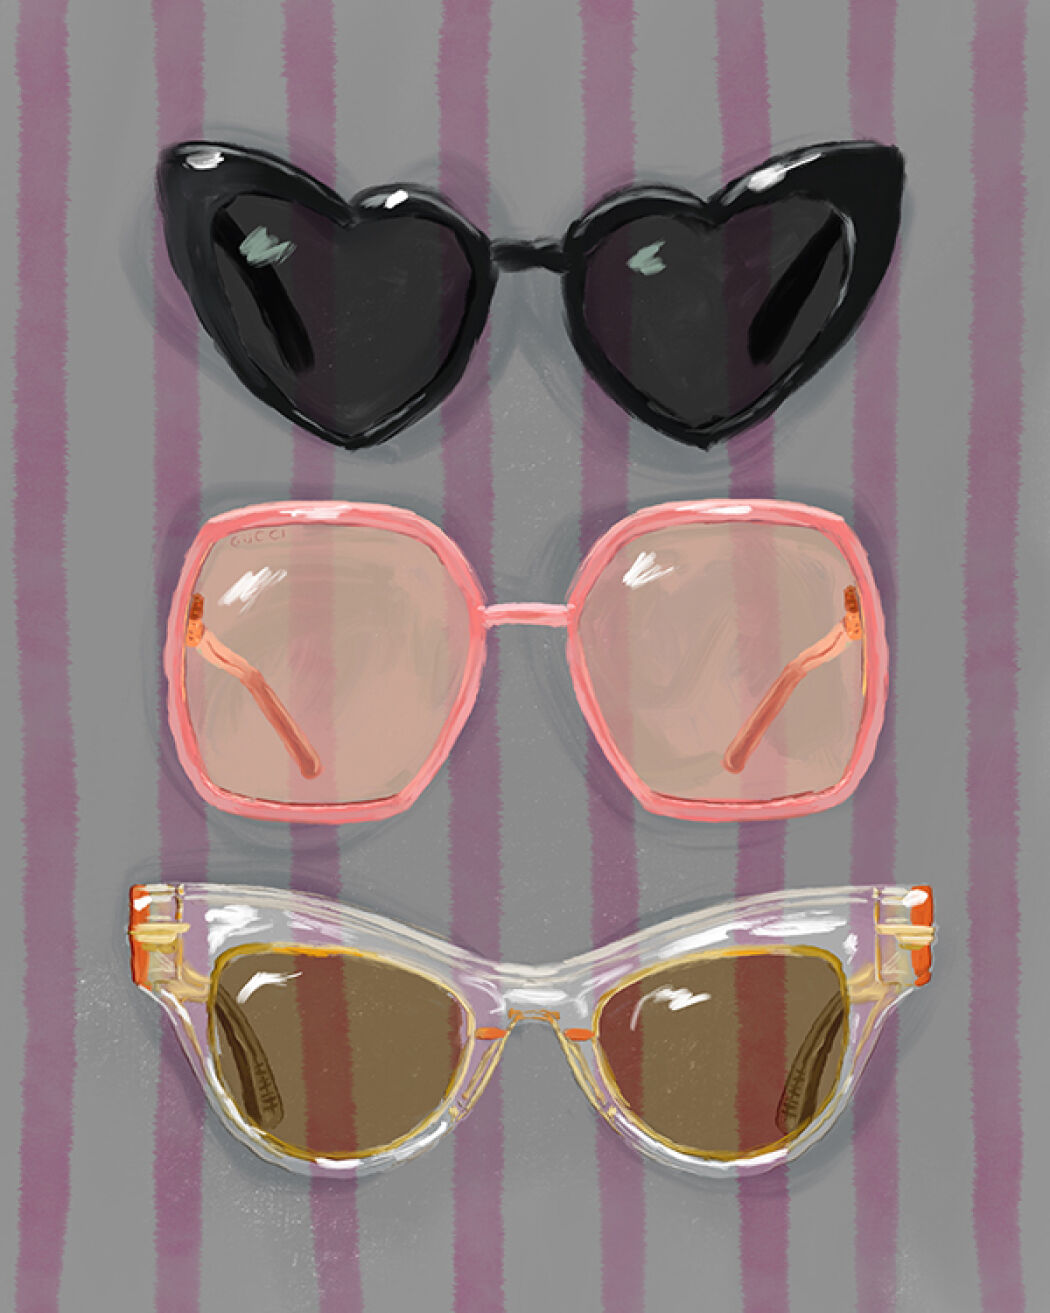 Fashion Accessories and sunglasses illustrated by Christina Gliha 